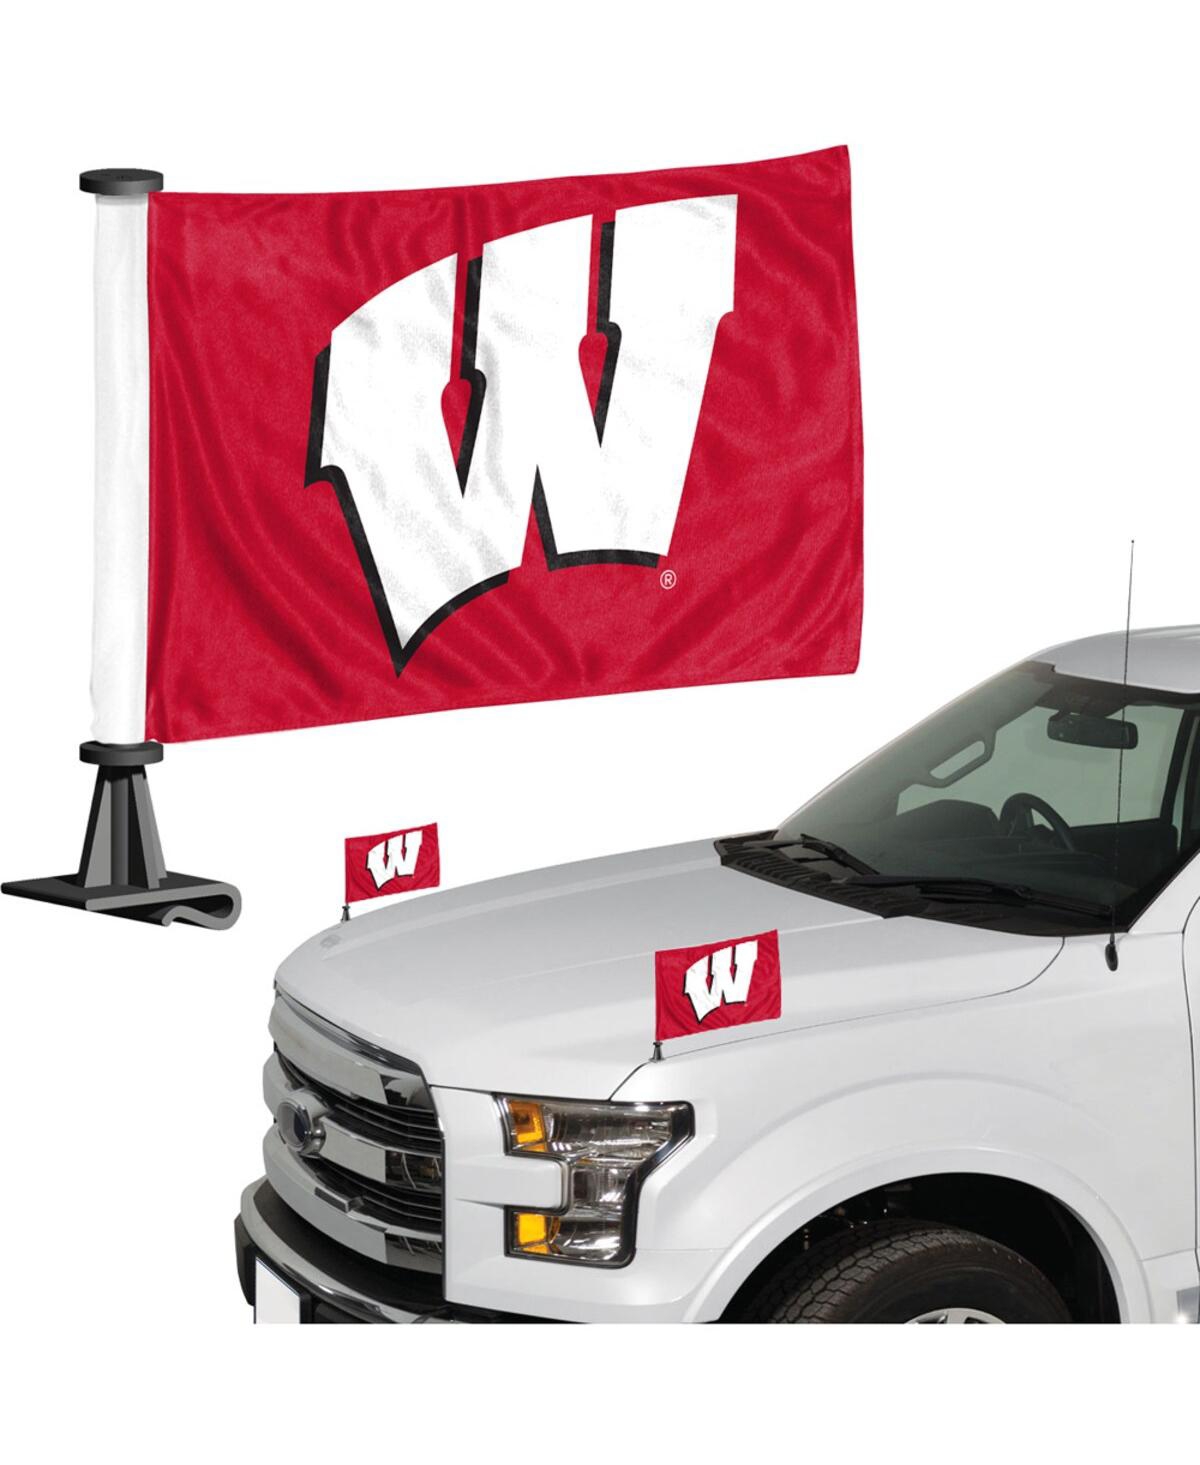 Pro Mark Wisconsin Badgers Auto Ambassador Flag Set - Red